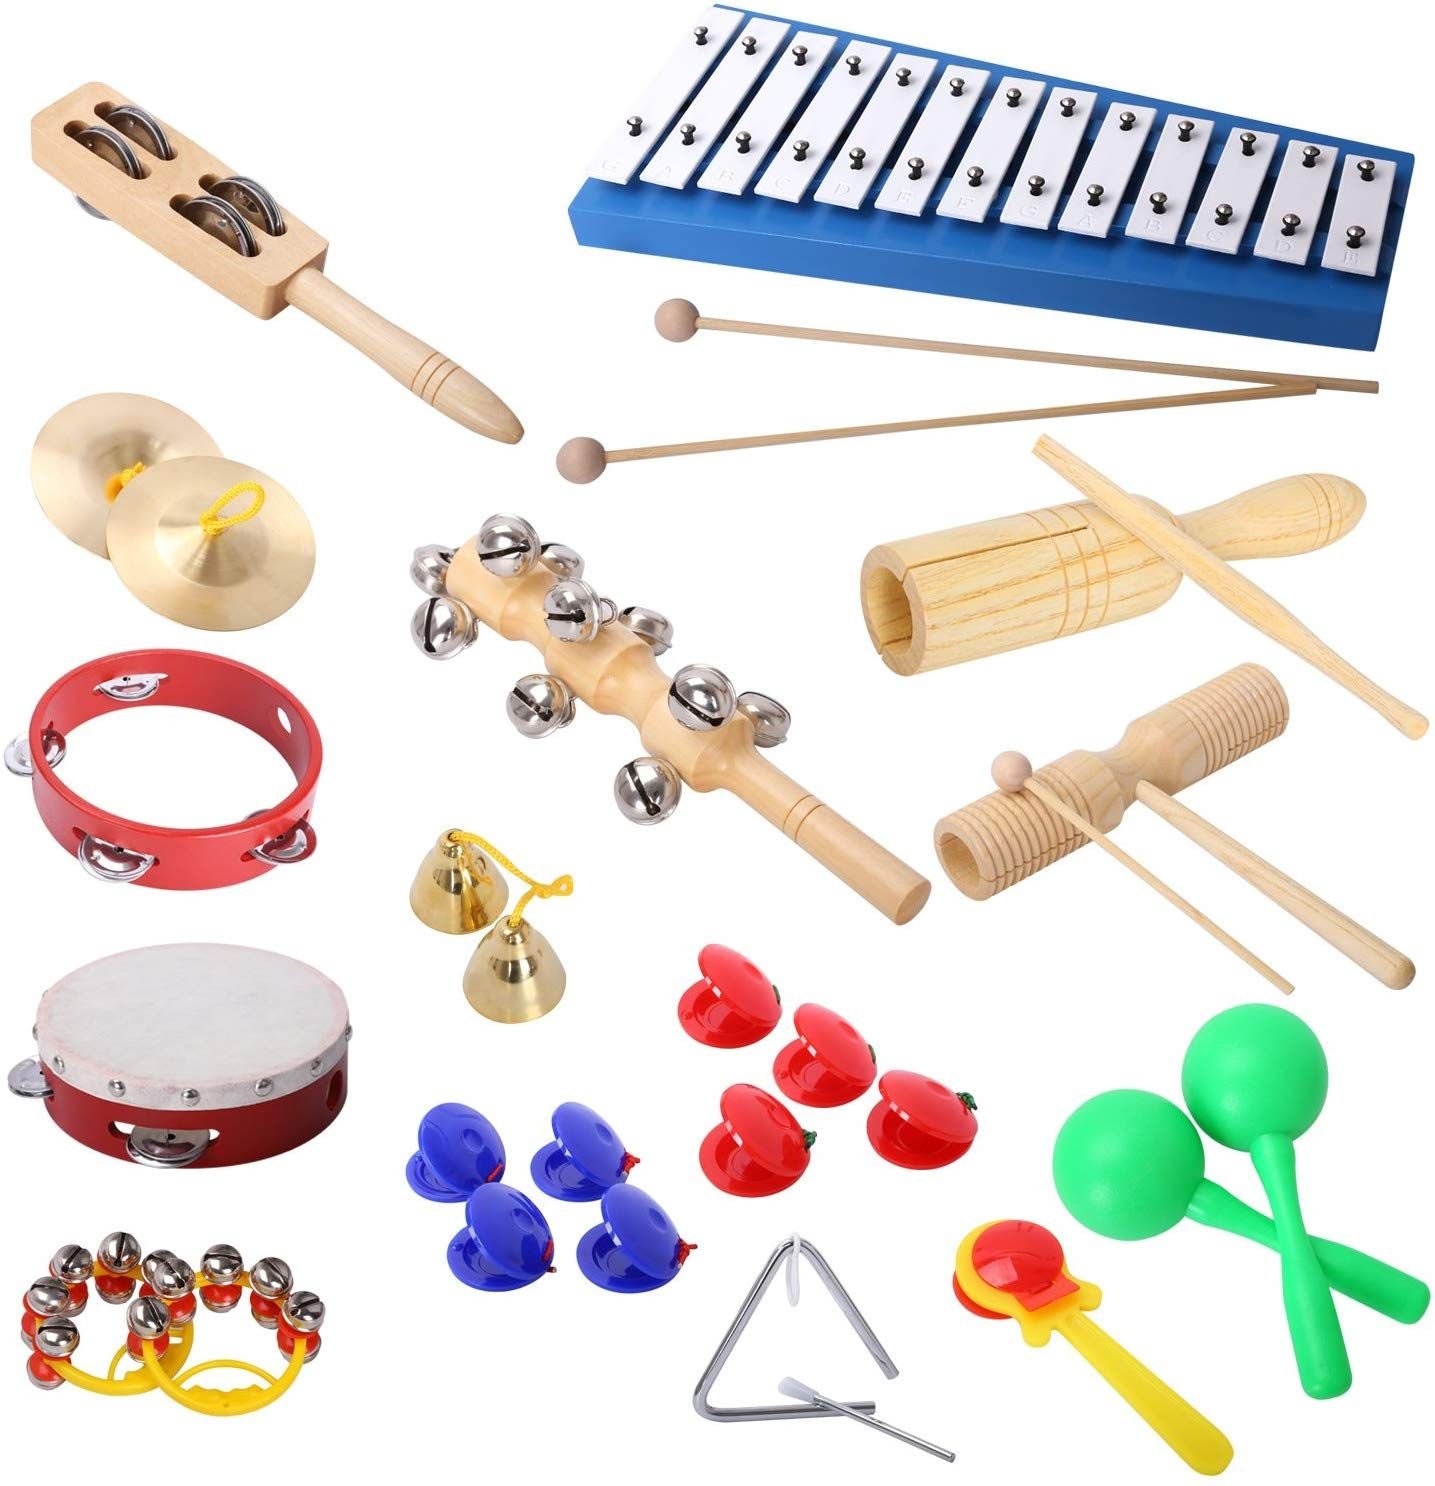 Изучай музыкальный инструмент. Музыкальные инструменты. Детские музыкальные инструменты. Игрушечные музыкальные инструменты. Ручной музыкальный инструмент.